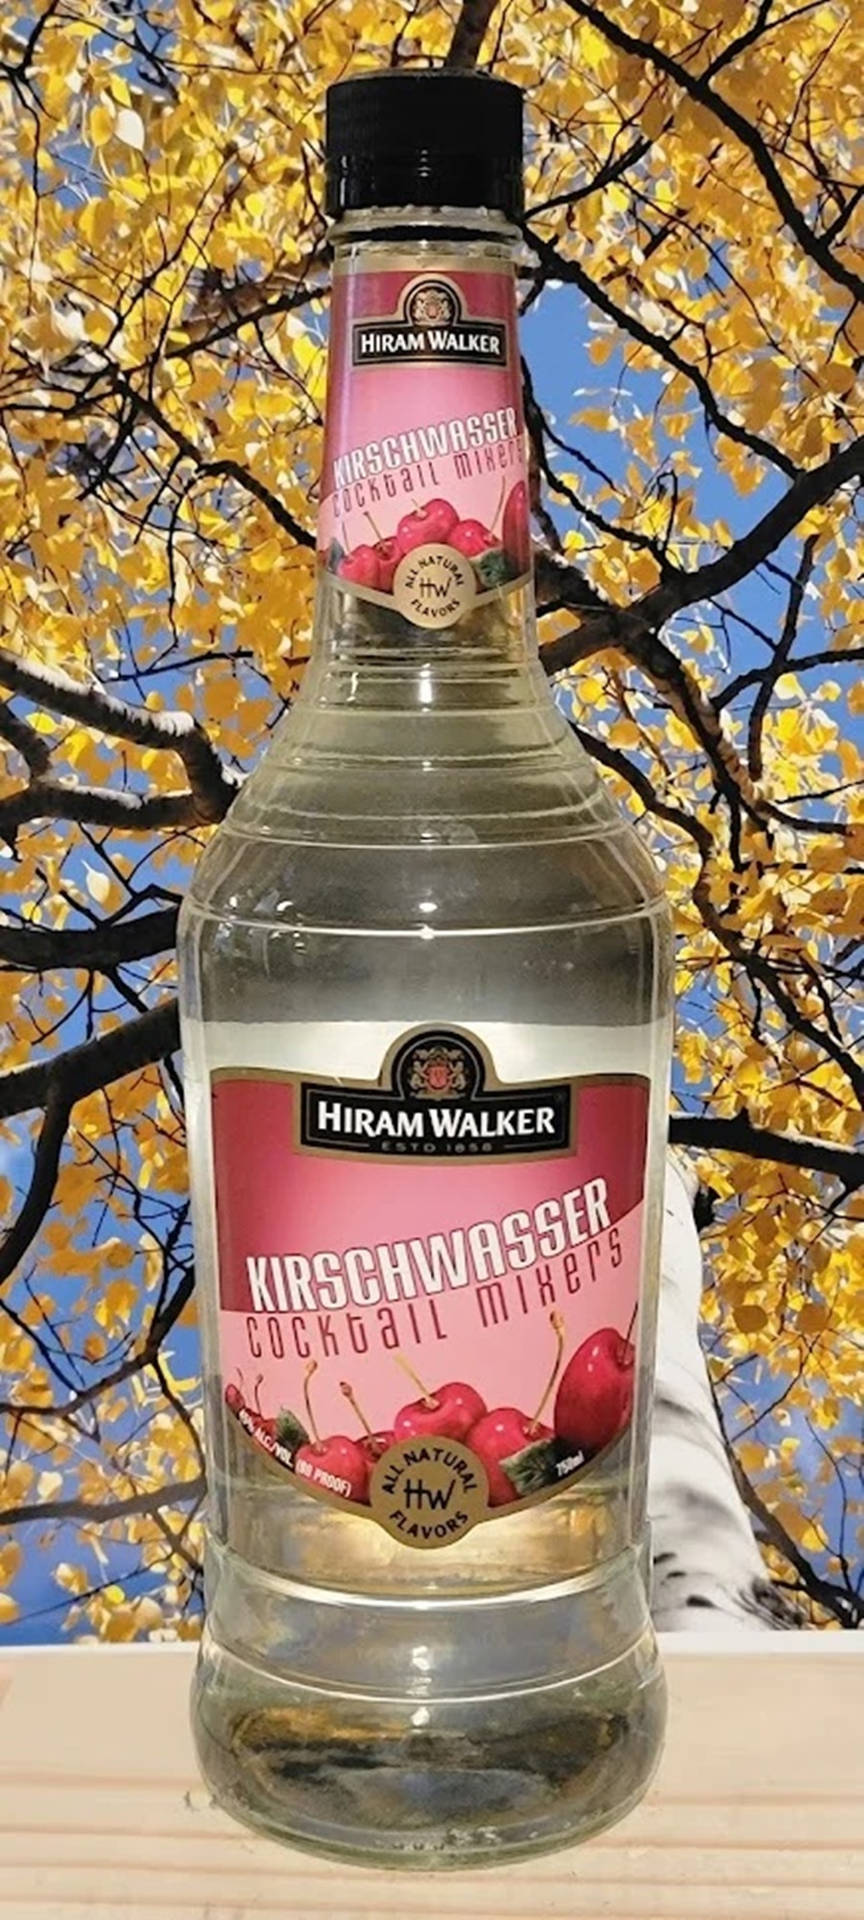 Hiram Walker Kirschwasser Cocktail Mixers Photography Picture